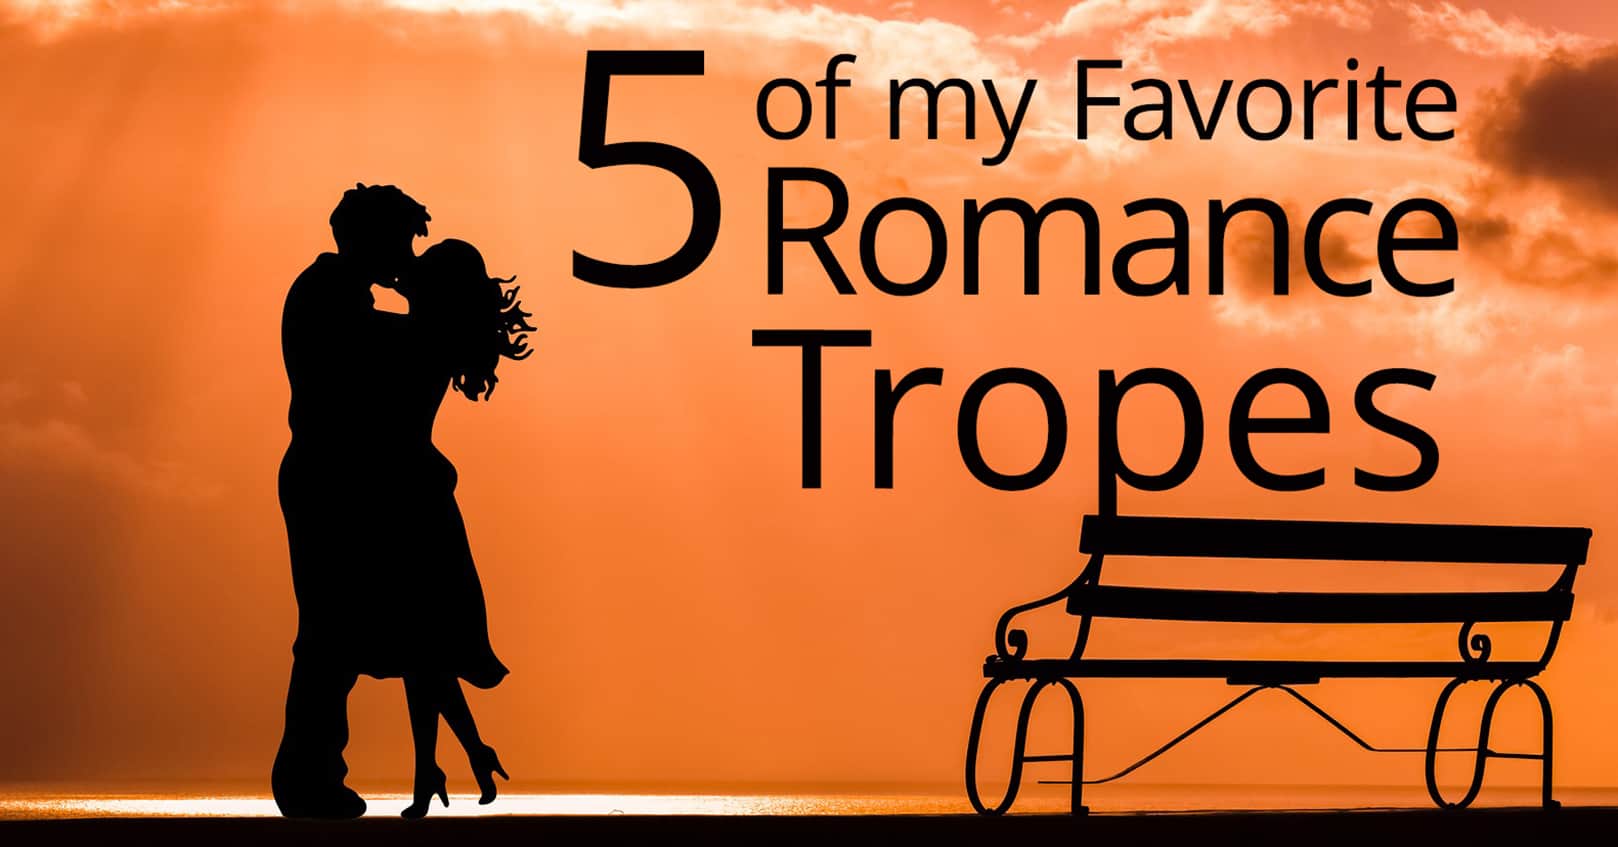 Favorite Romance Tropes